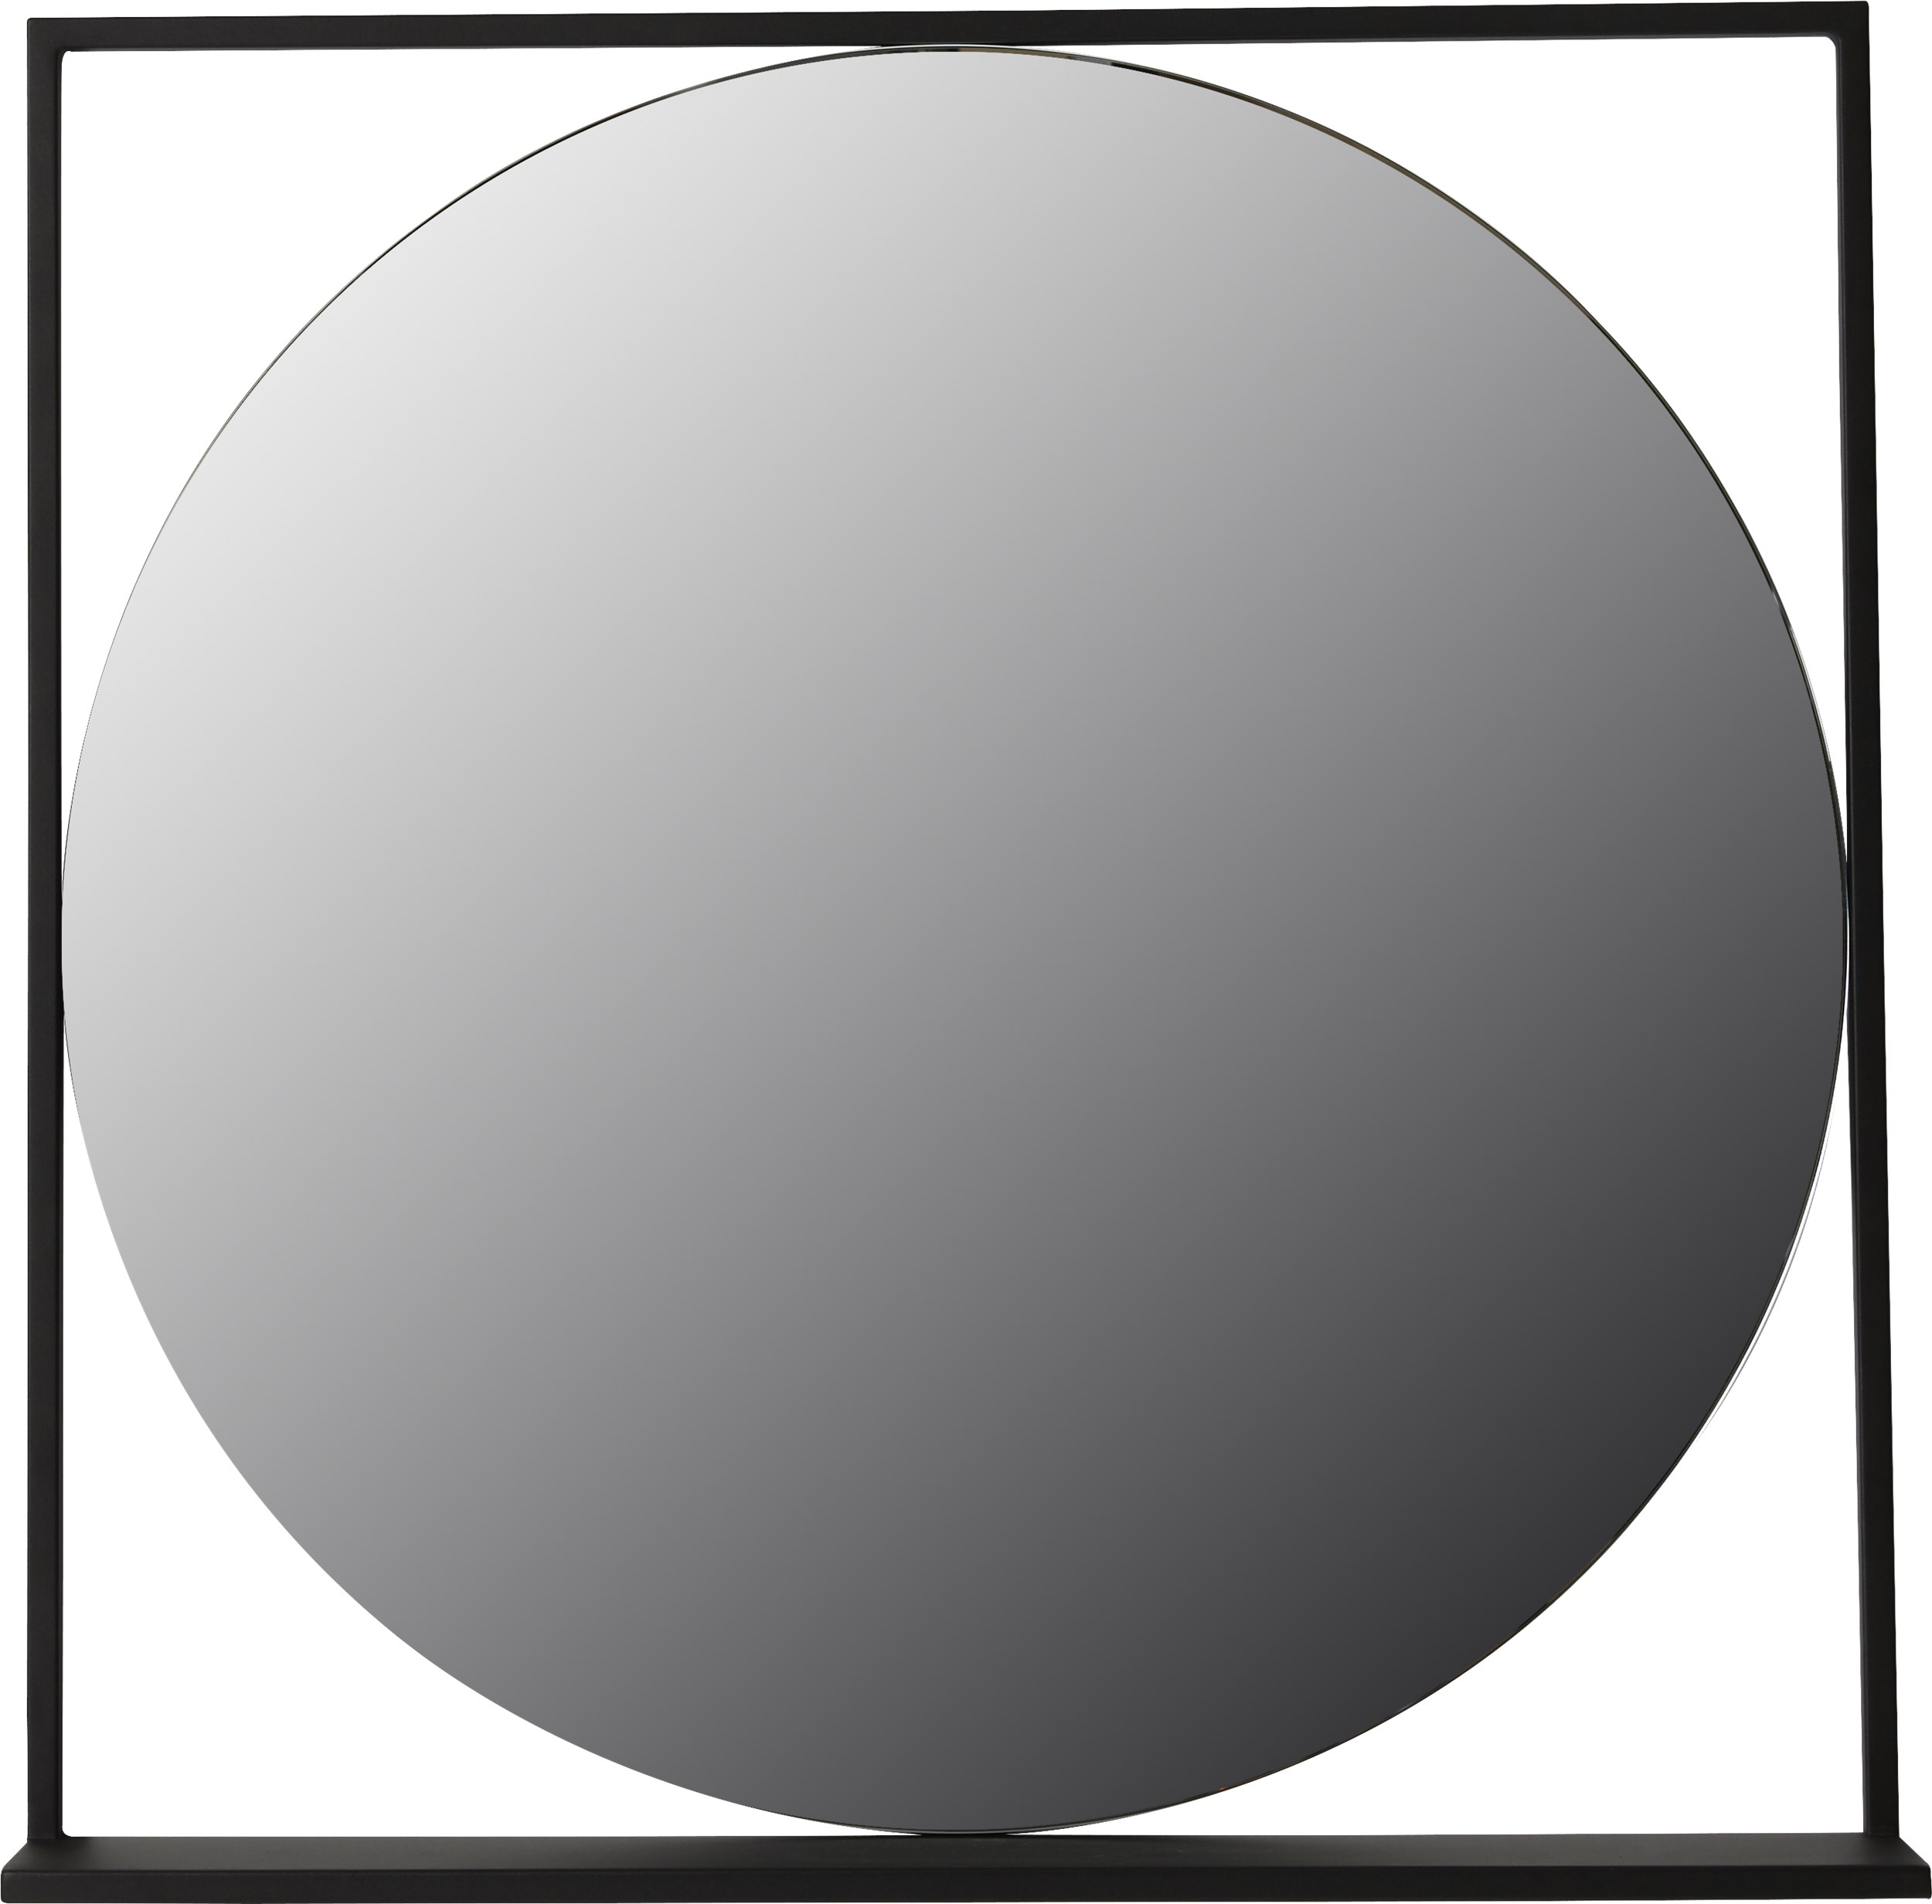 Asgard spegel 80 x 80 x 11 cm - Svart pulverlackerad metall och hylla i svart pulverlackerad metall